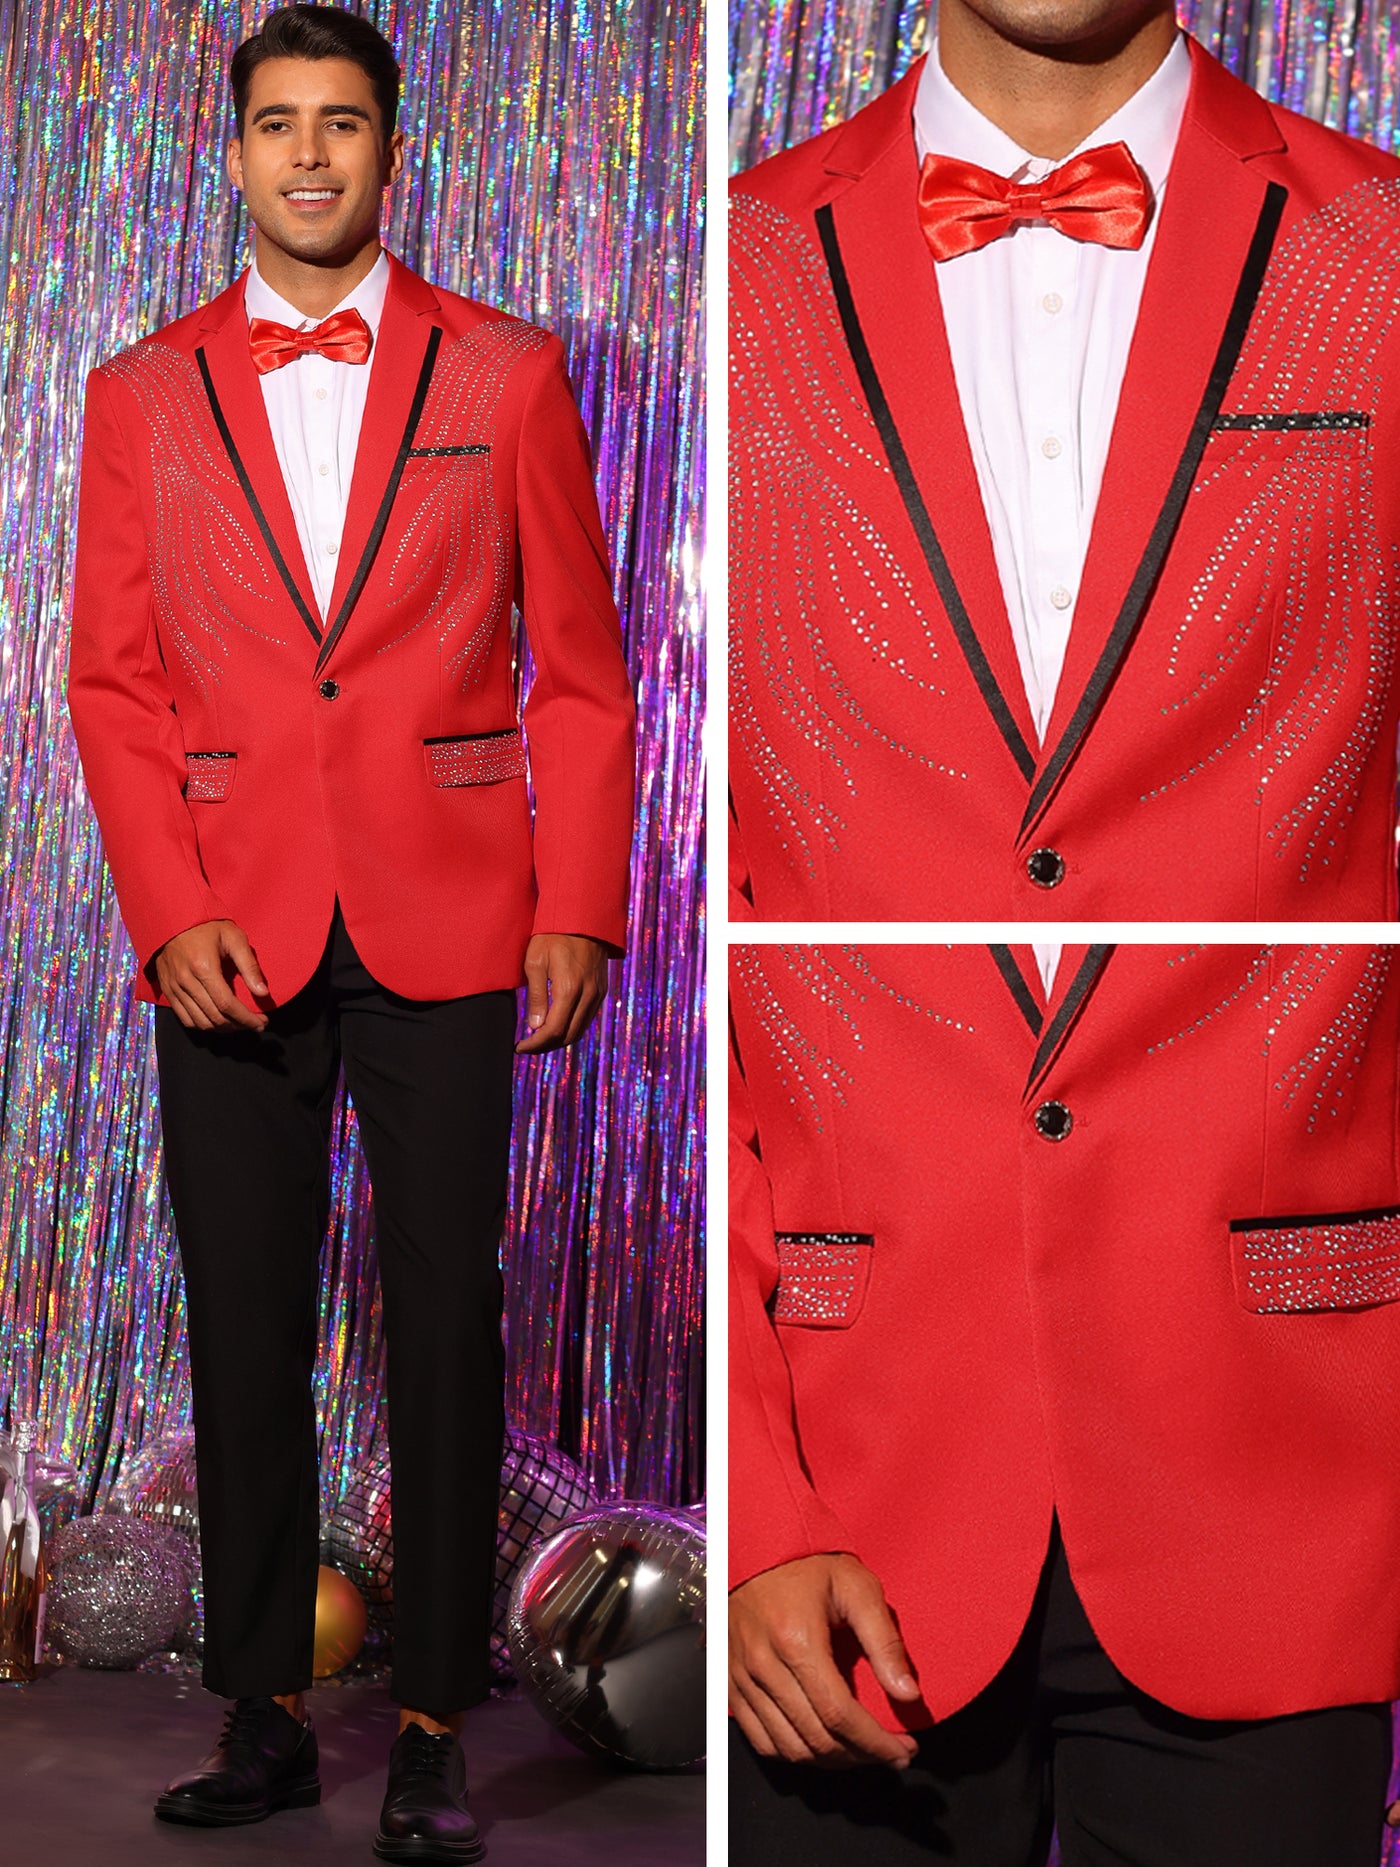 Bublédon Tuxedo Suit Jacket for Men's Slim Fit Party Prom Shiny Rhinestone Decoration Blazer